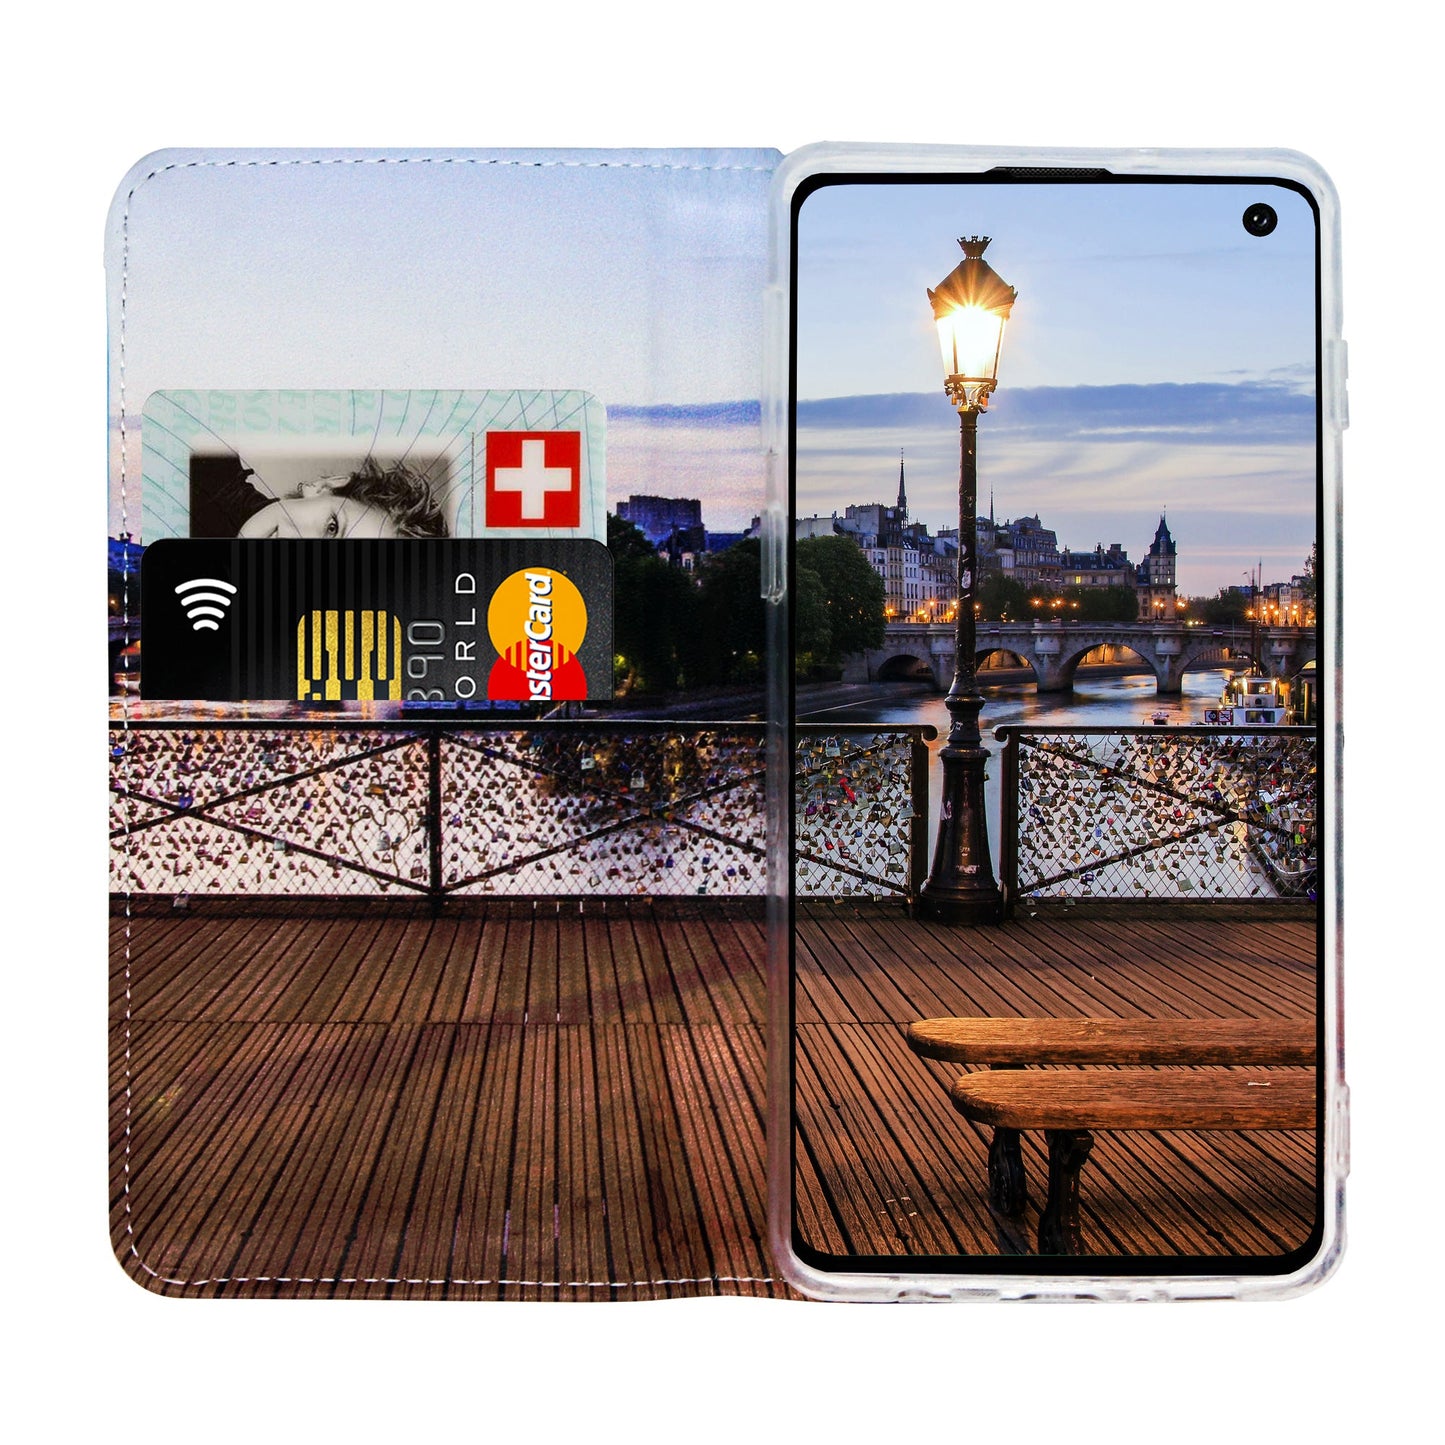 Paris City Panorama Case for Samsung Galaxy S10 Plus